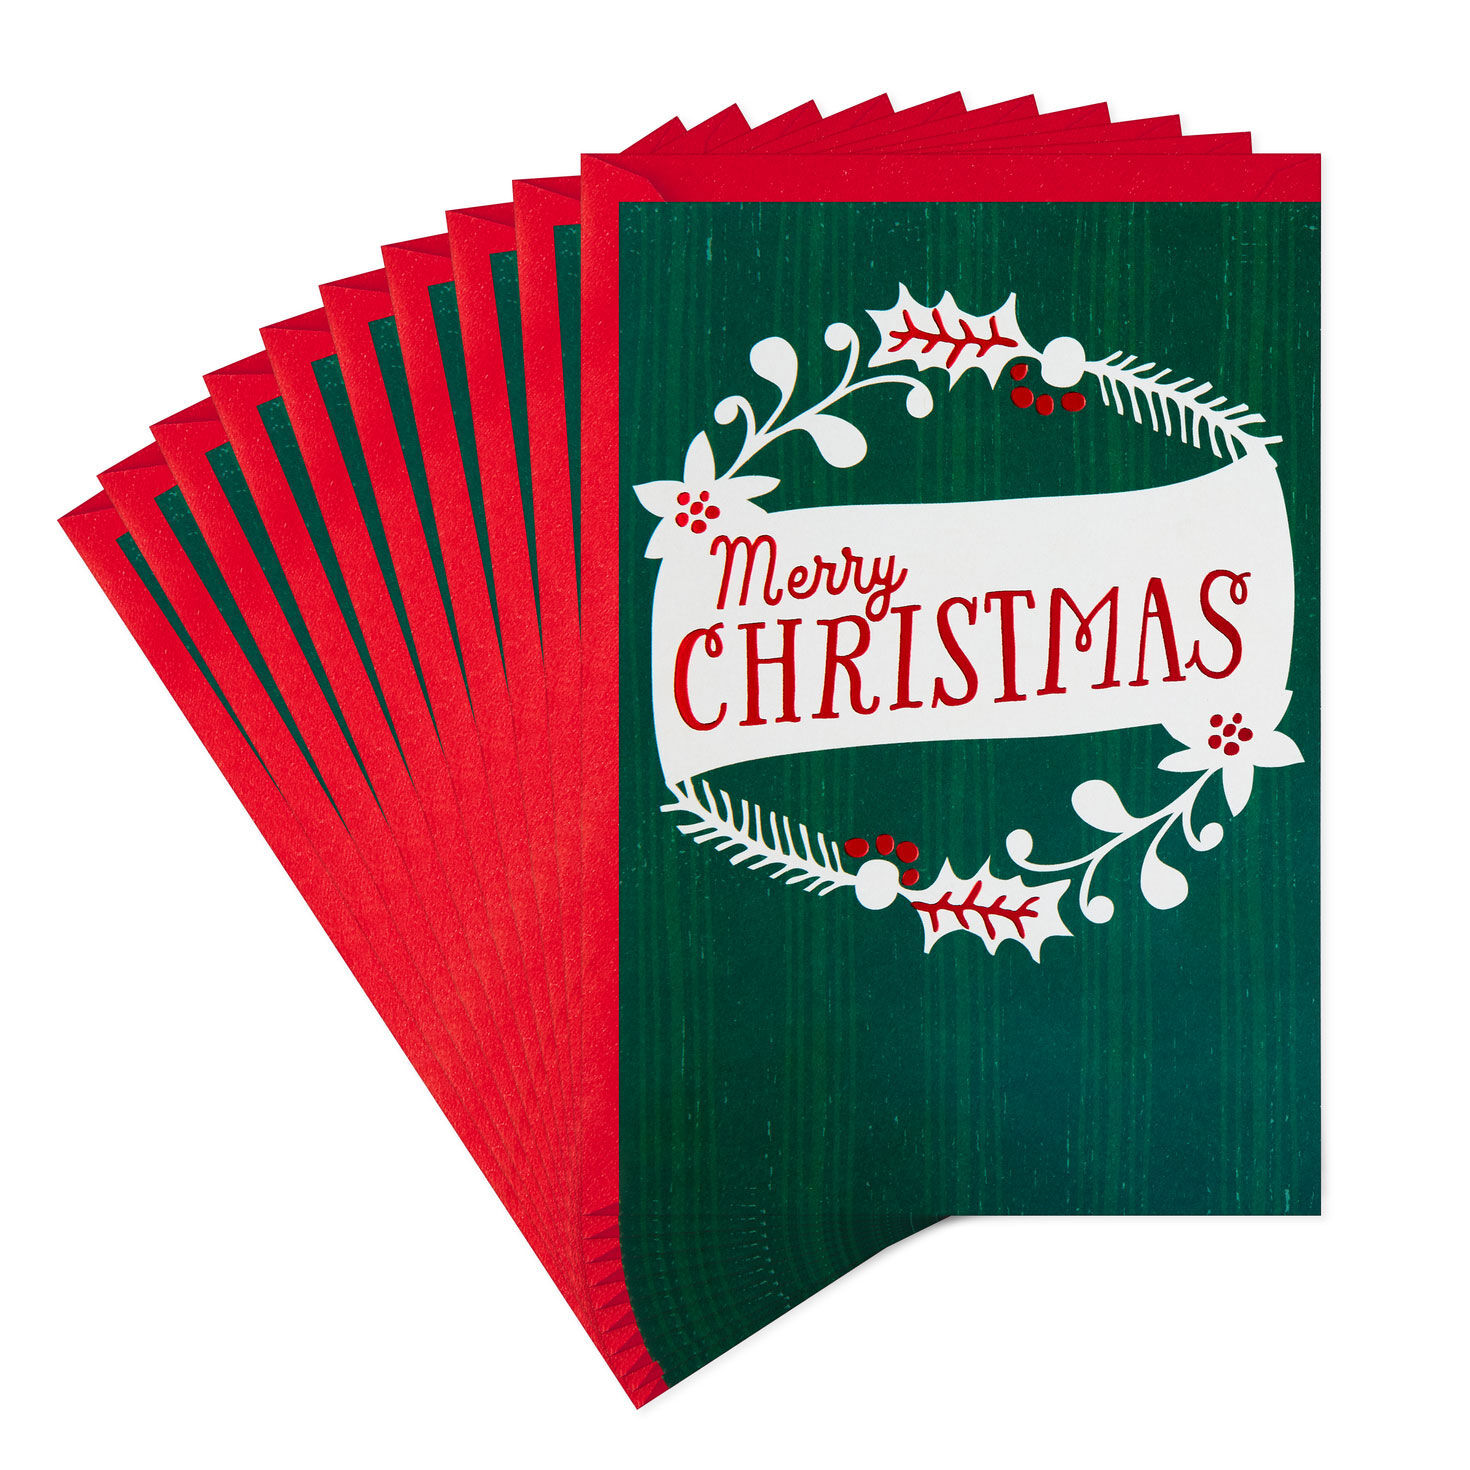 10 Christmas Cards Pack Hallmark Season's Greetings with 10 Envelopes 